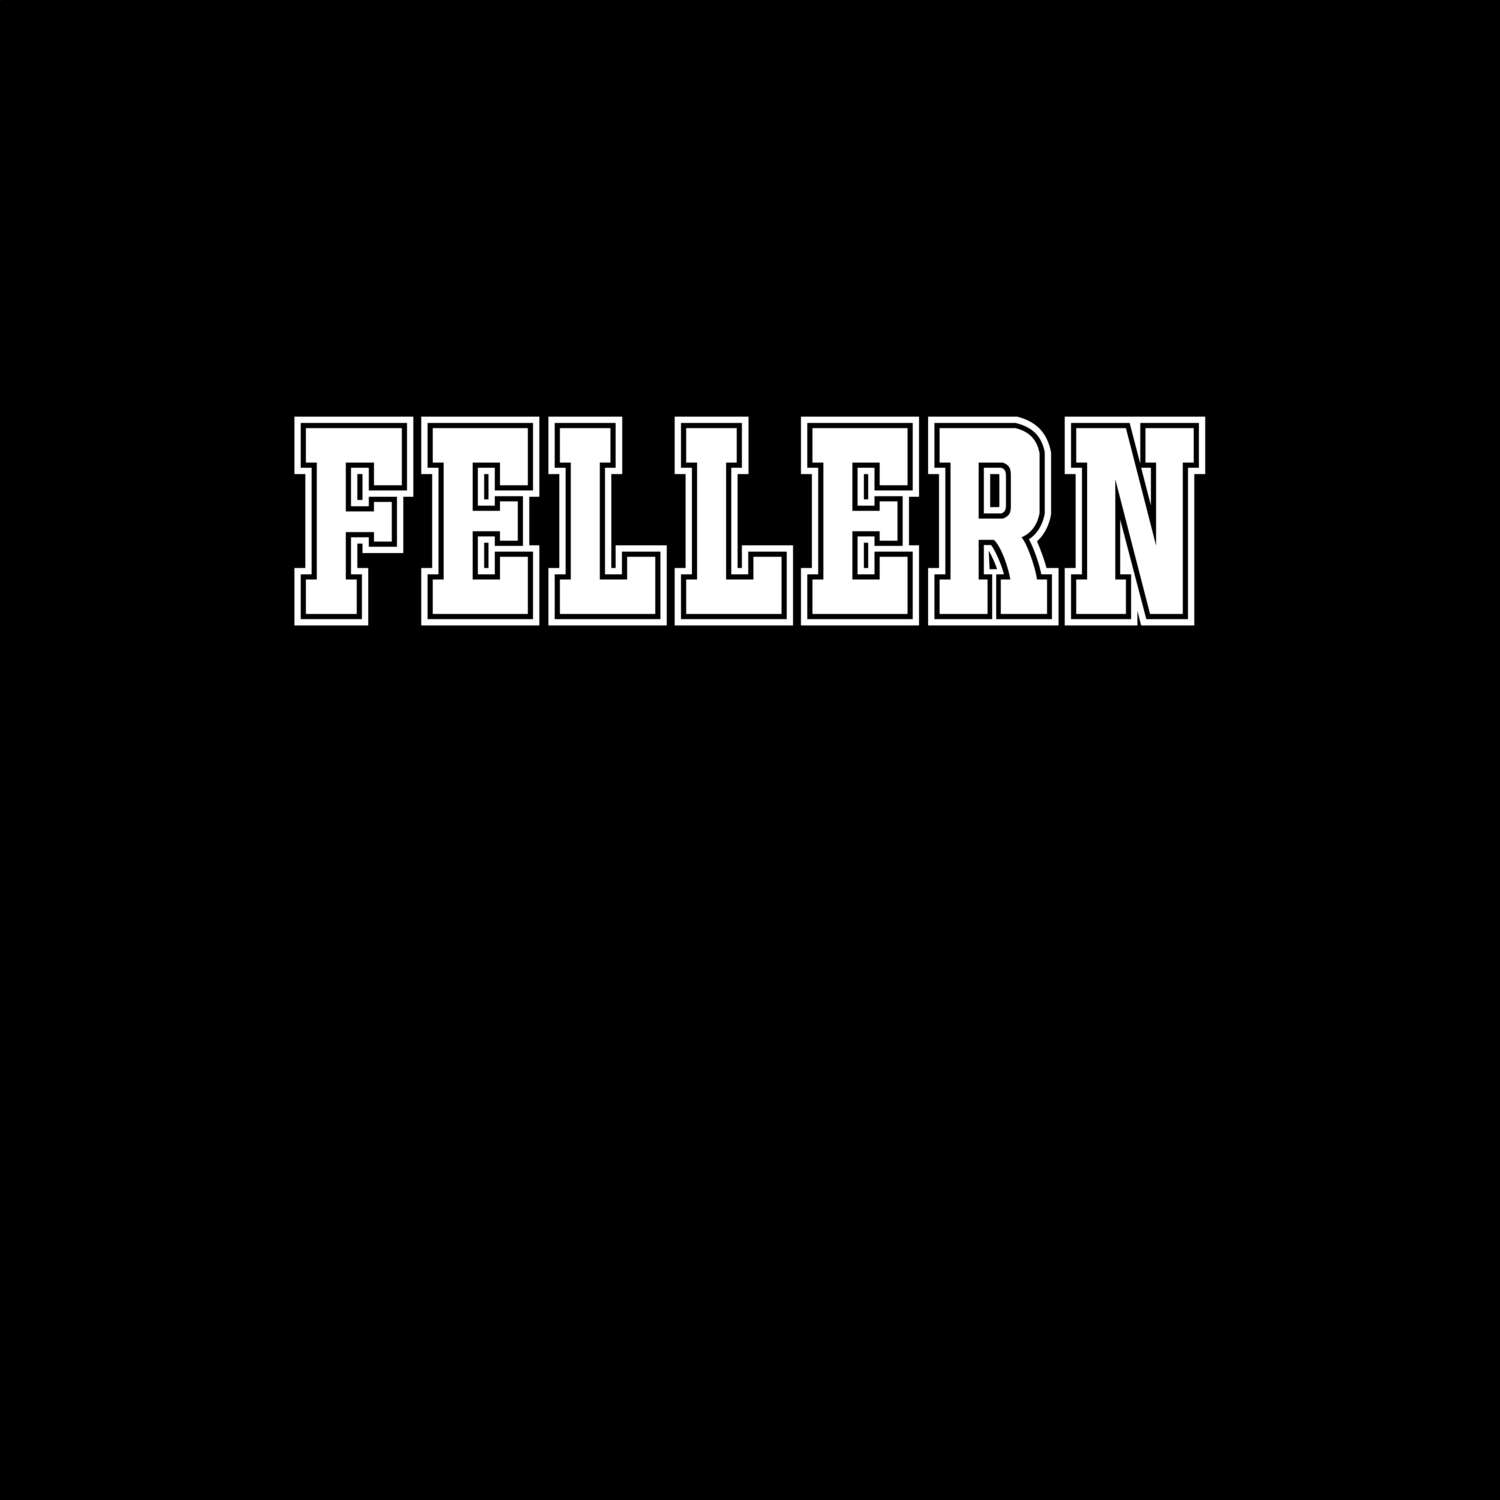 Fellern T-Shirt »Classic«